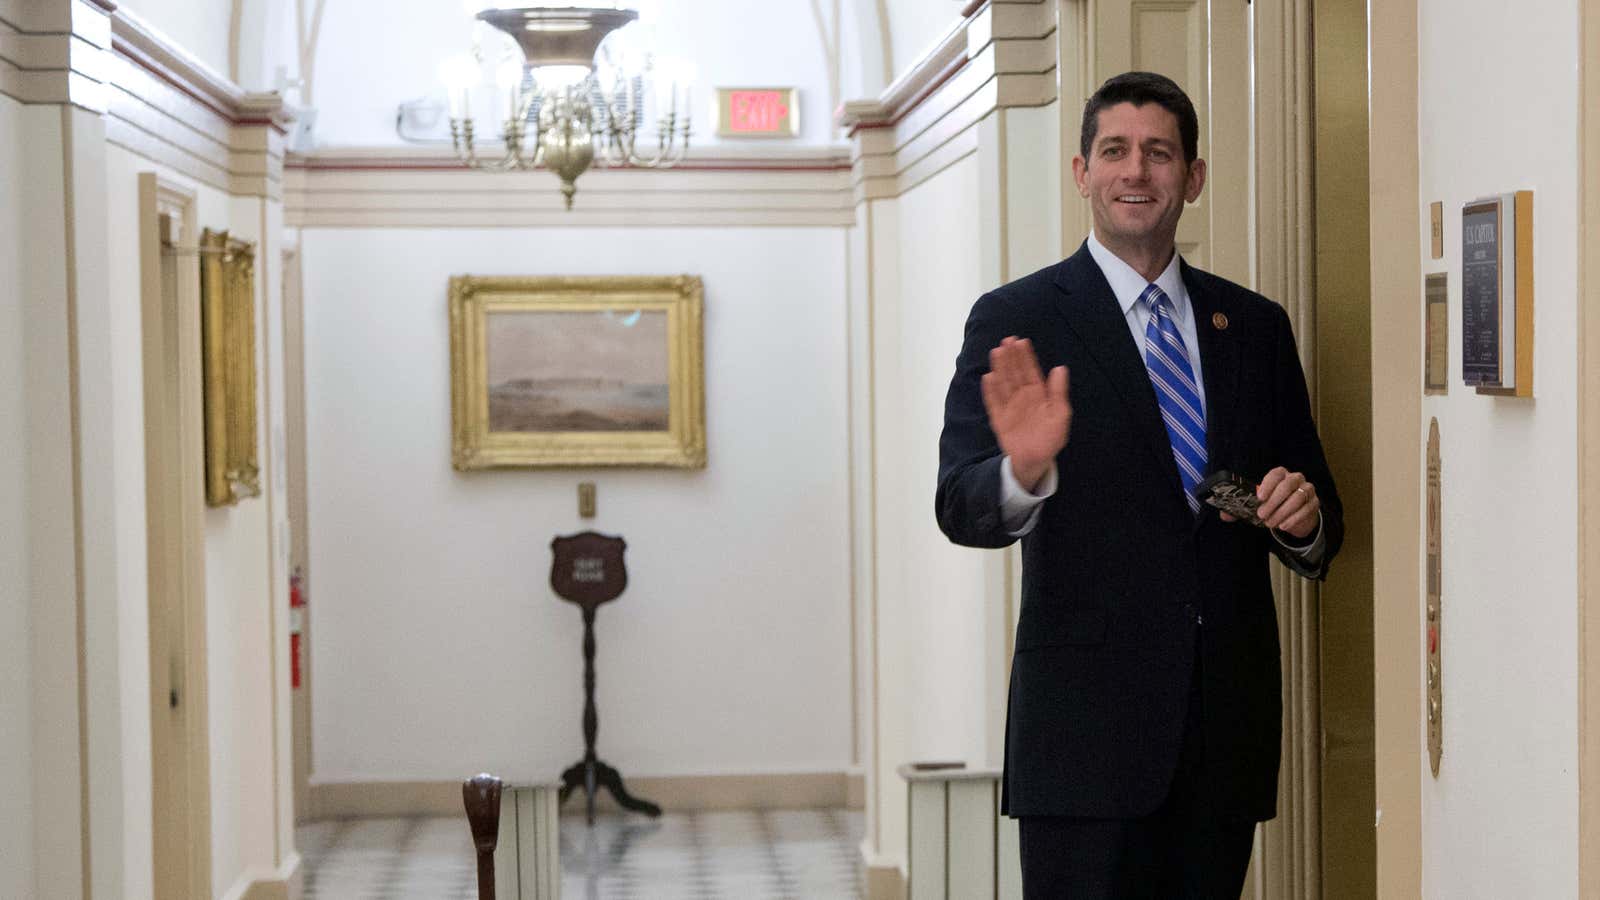 He’s back: Rep. Paul Ryan will lead the Republican budget negotiators.